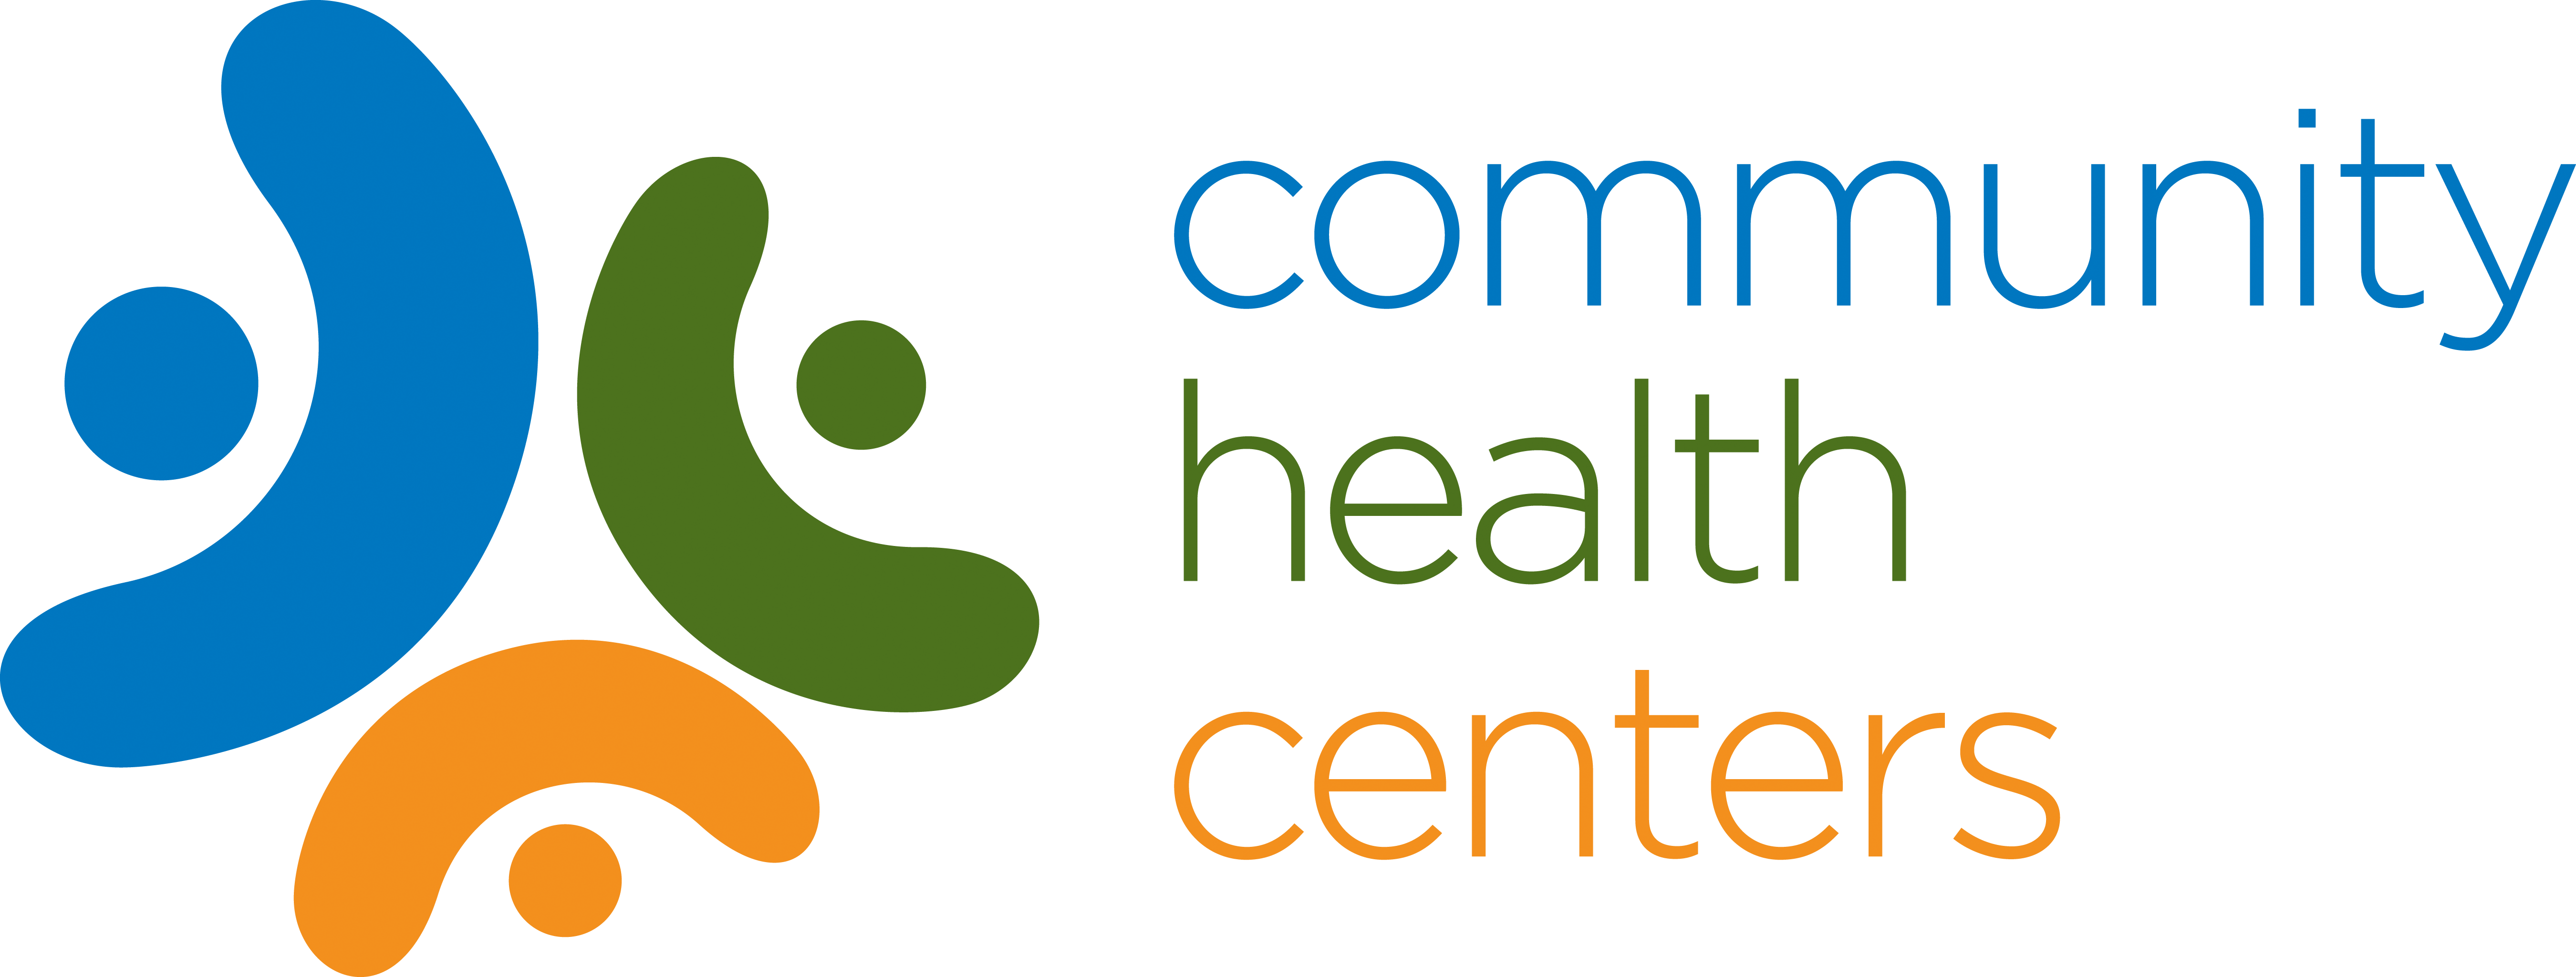 Chc Primarylogo Color - Community Health Centers Logo (5400x2049)